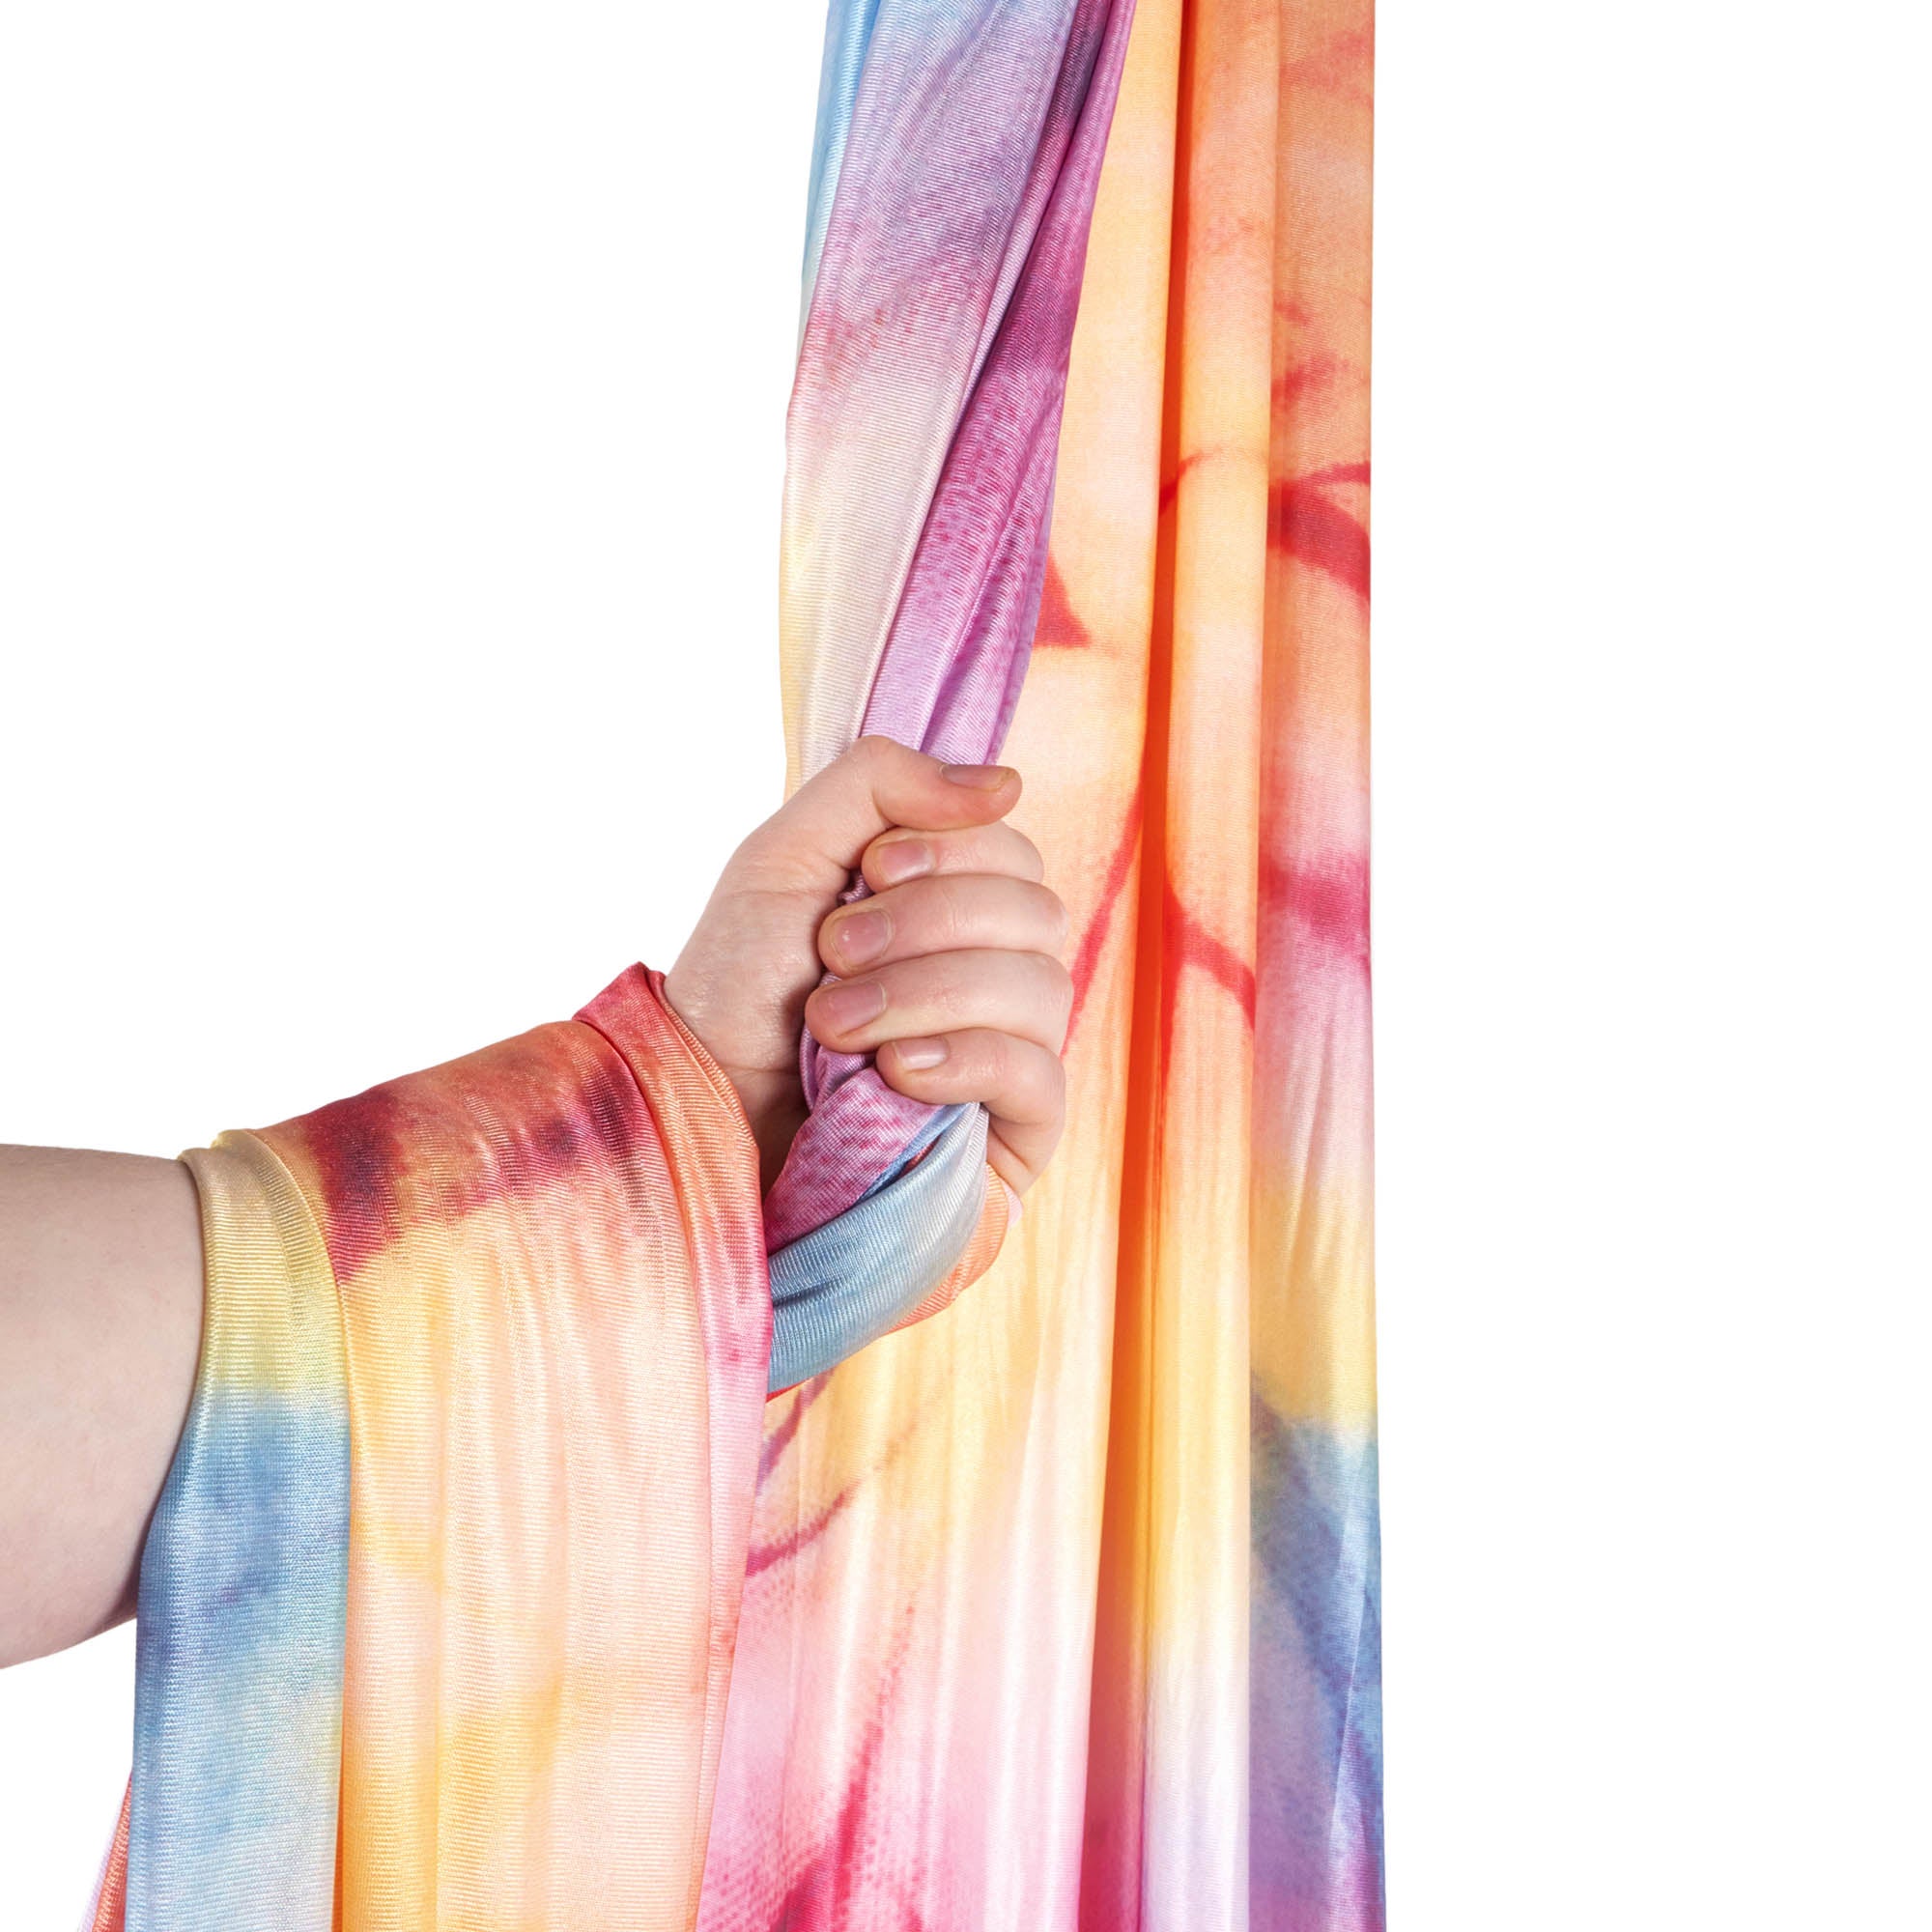 Cosmic rainbow silk wrapped around hand